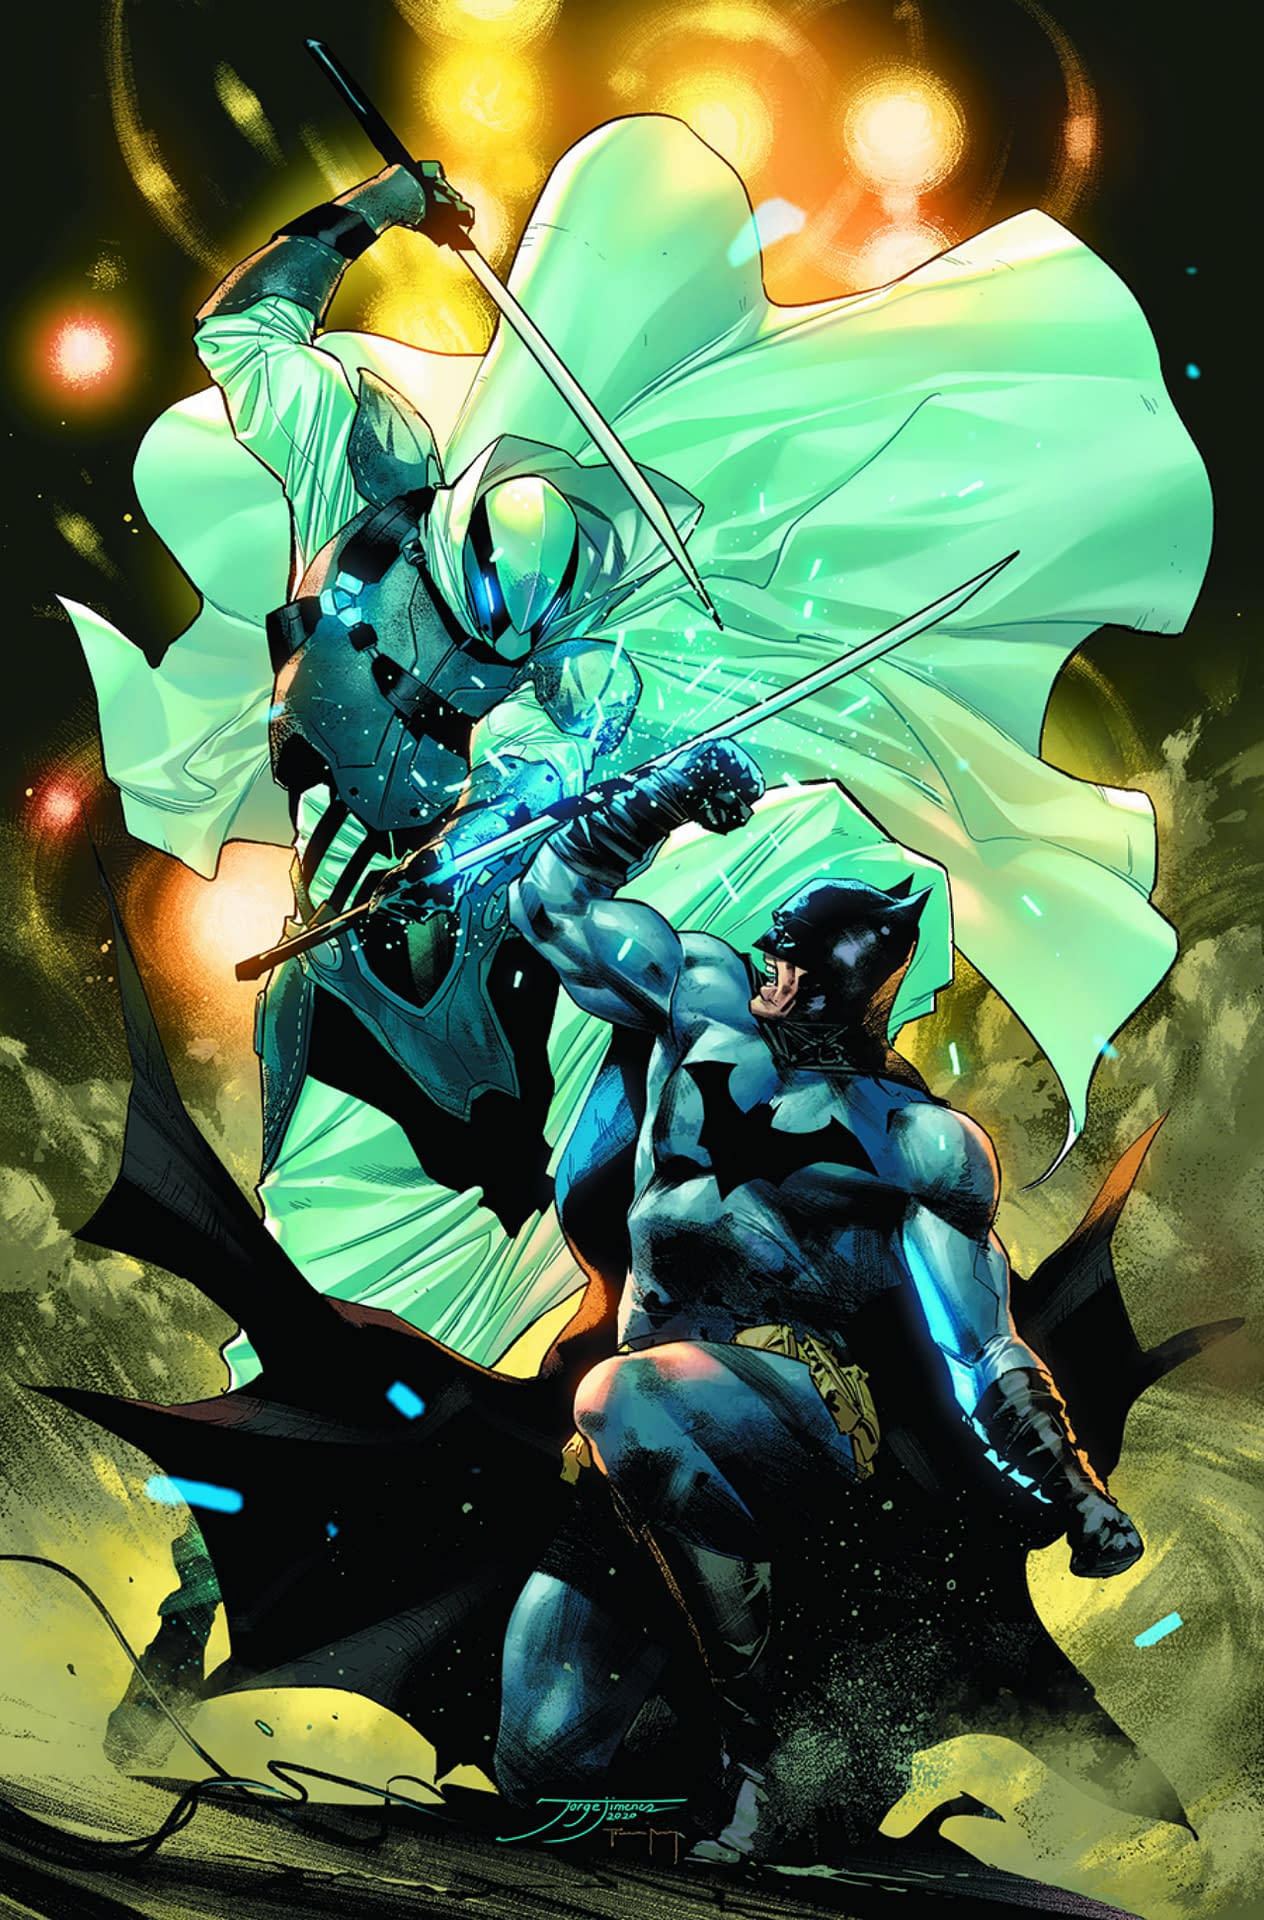 Will Ghost-Maker Deal With Problems Batman Won't? Batman #100...